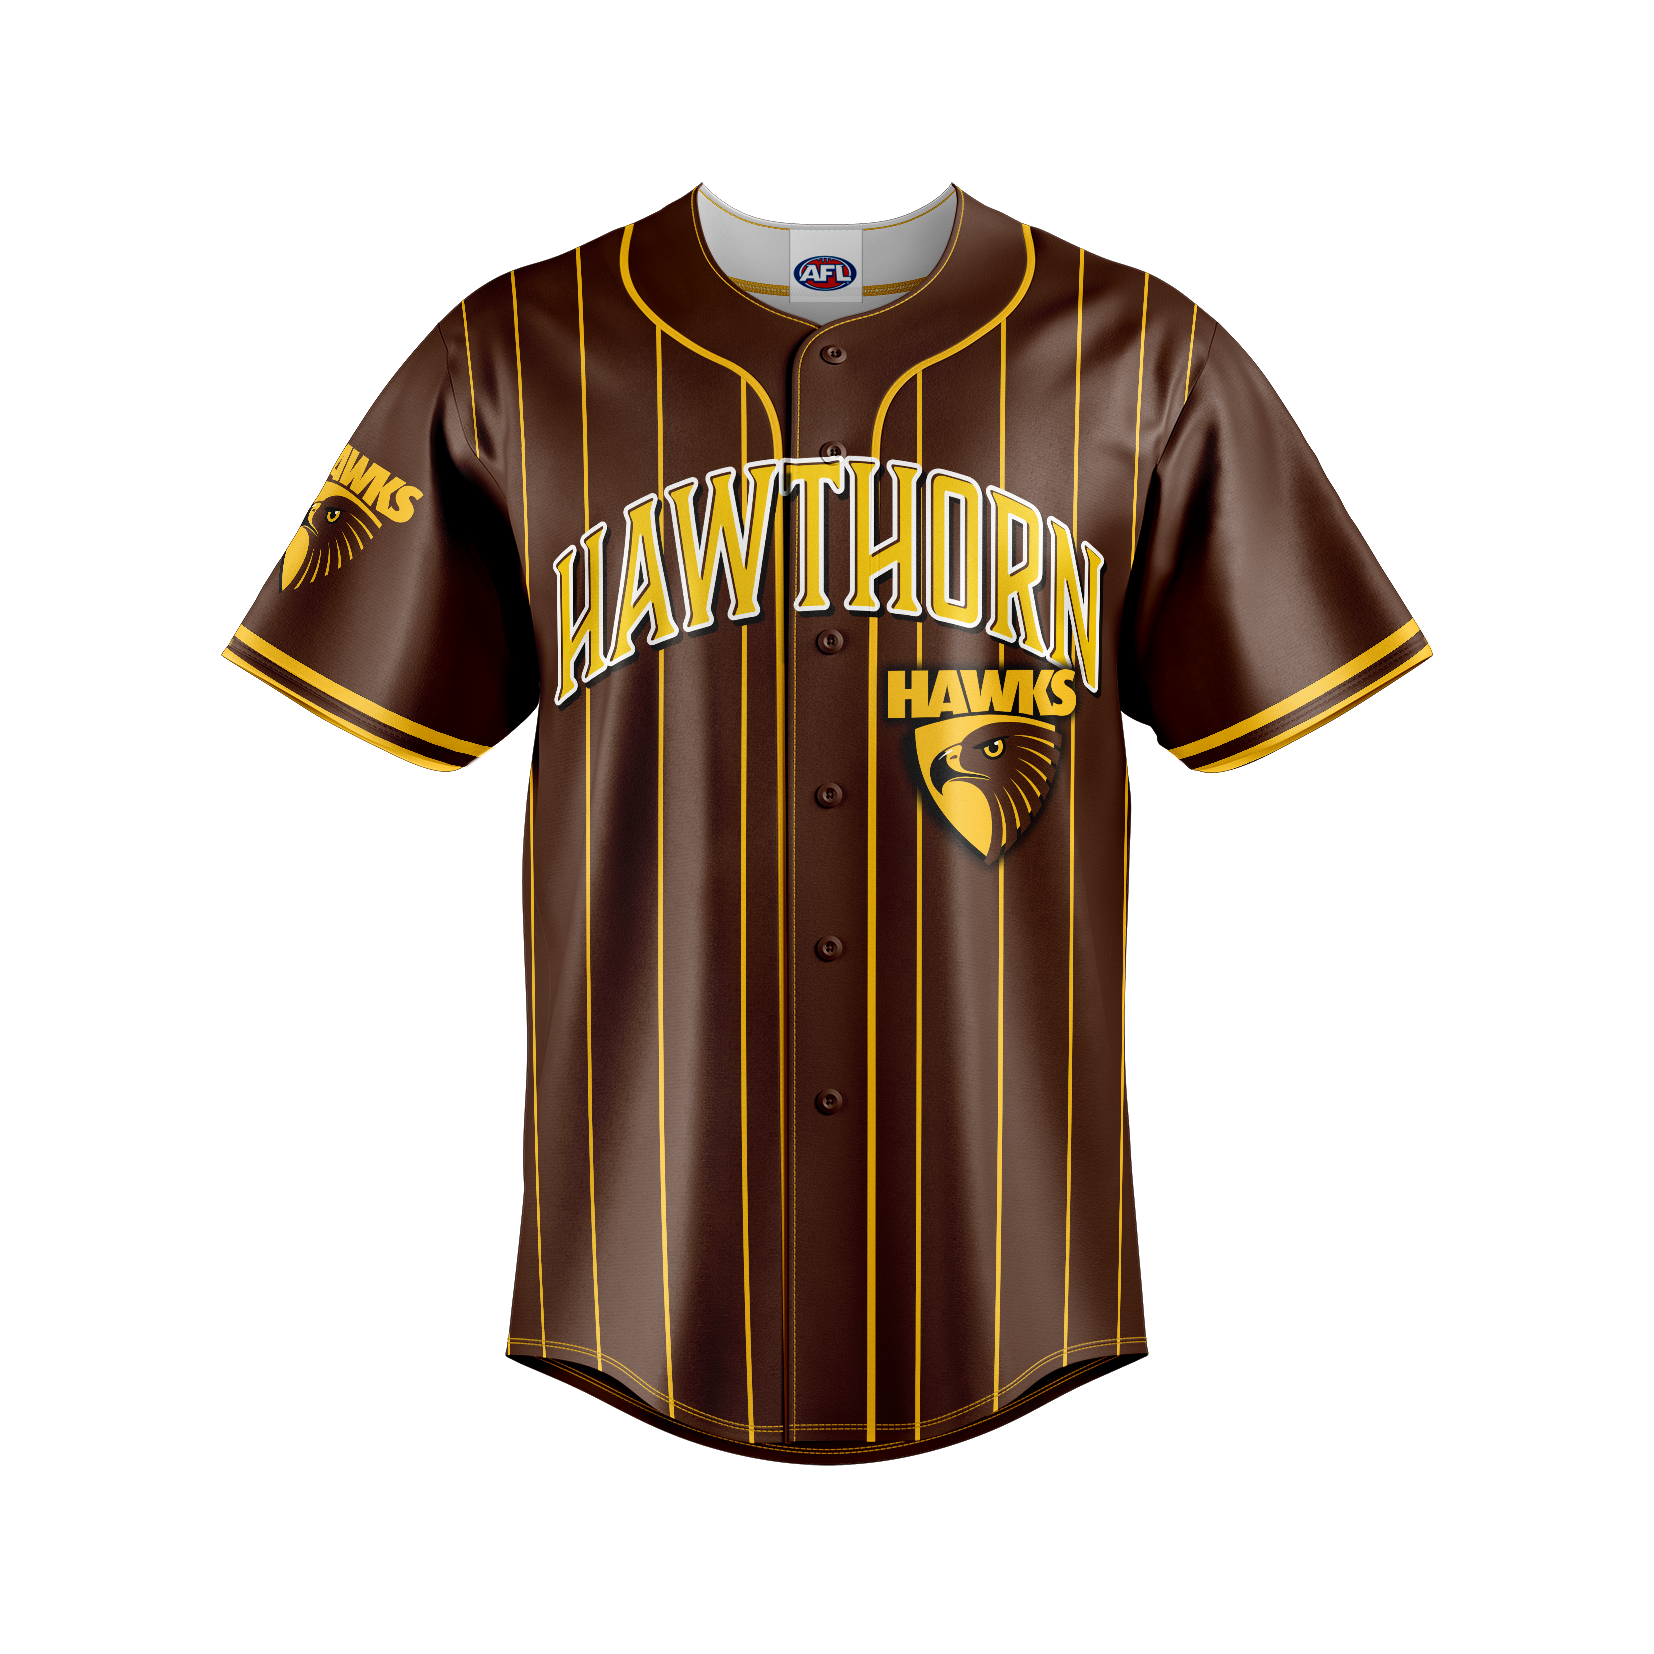 Hawthorn Hawks "Slugger" Baseball Shirt